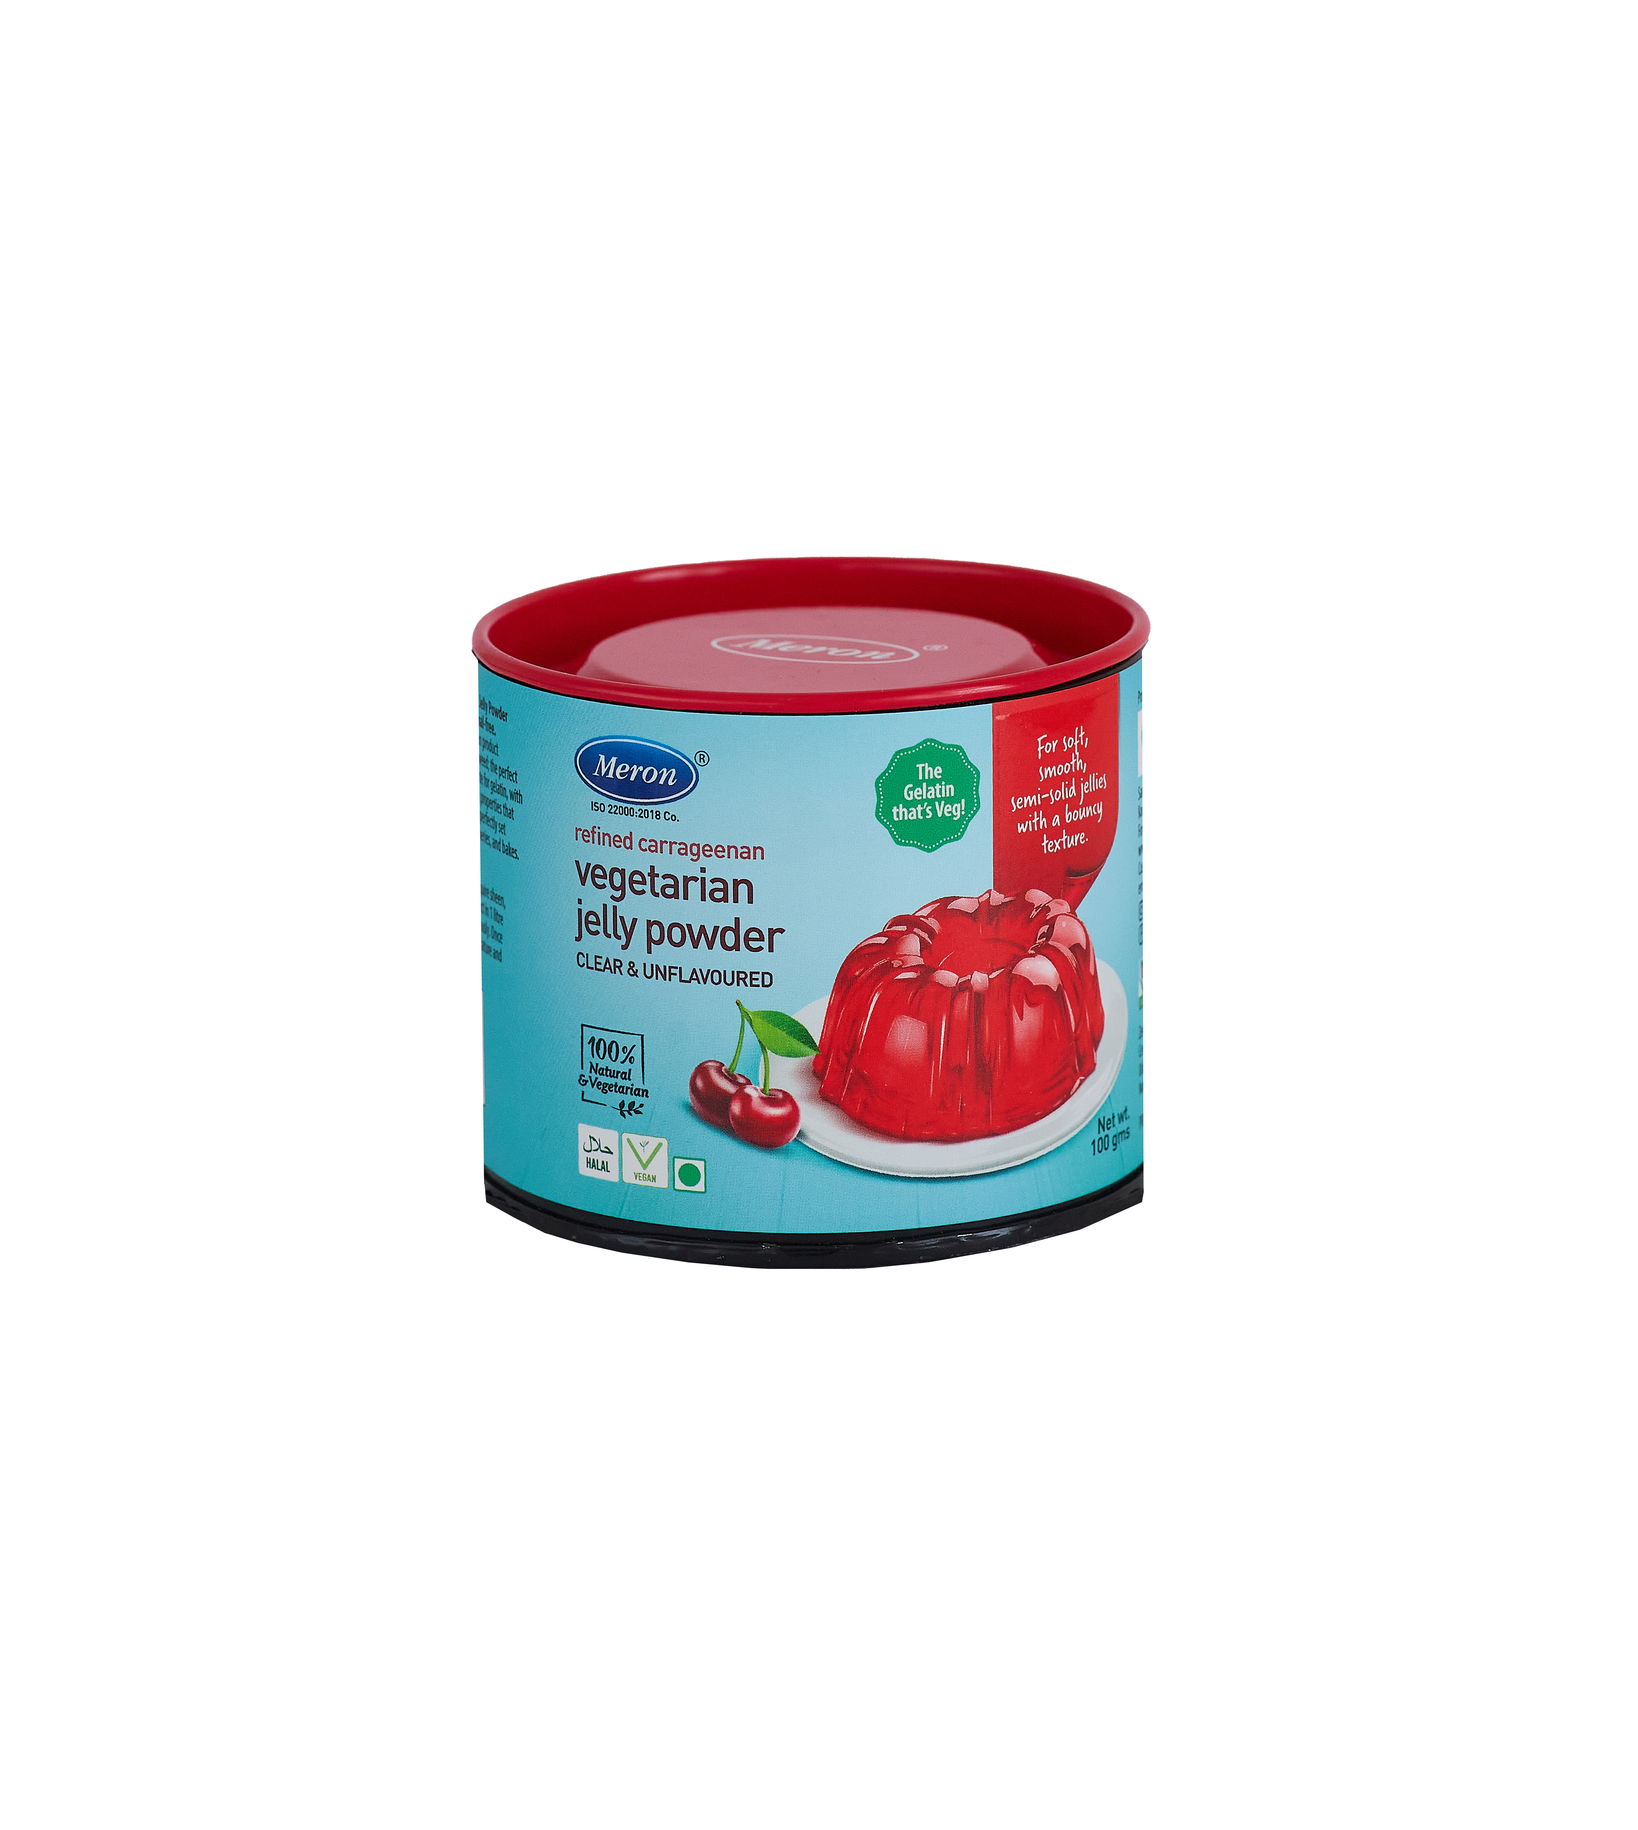 Refined Carrageenan Jelly Powder 100 gm